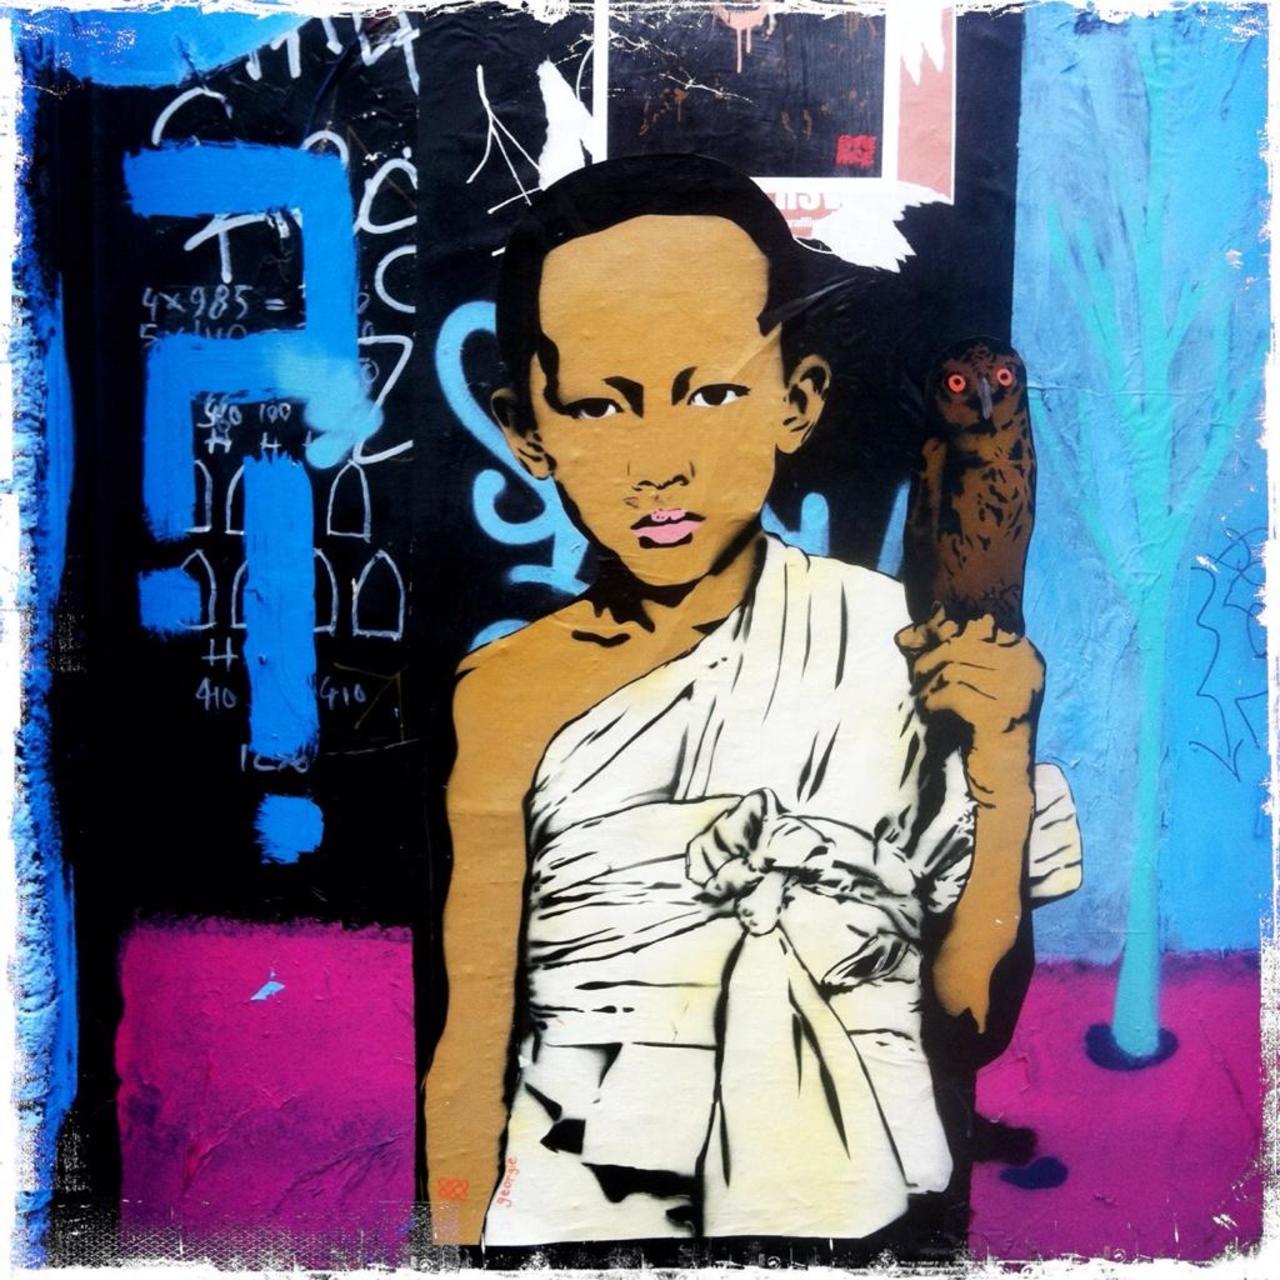 “@BrickLaneArt: Streetart Pedley Street #art #graffiti http://t.co/nCaoCSHHWW